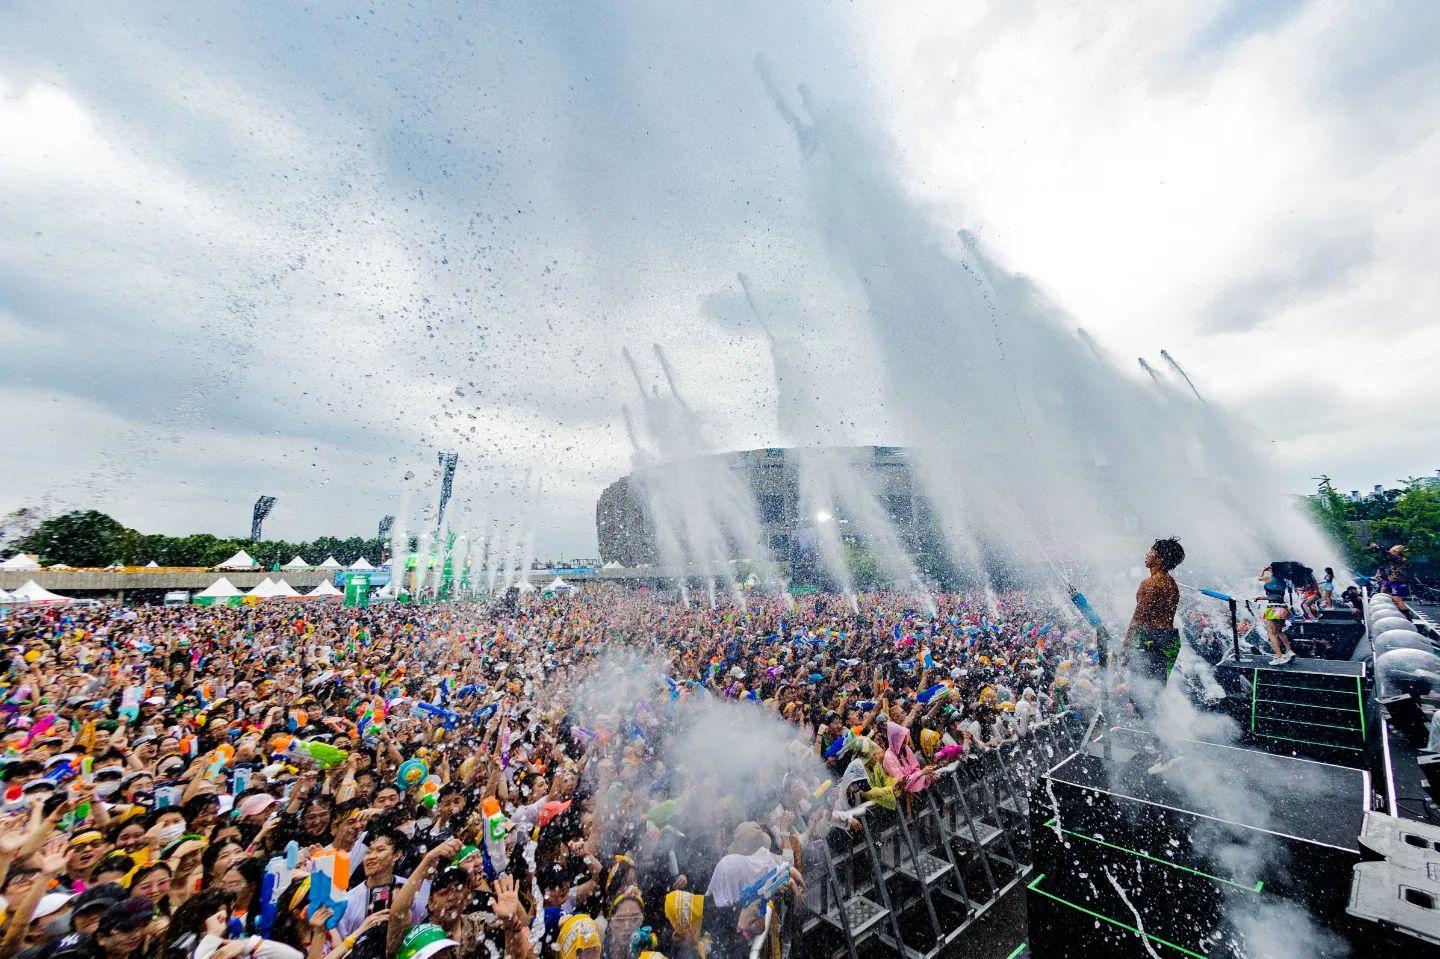 Korea's WATERBOMB Festival makes a splash in Dubai!